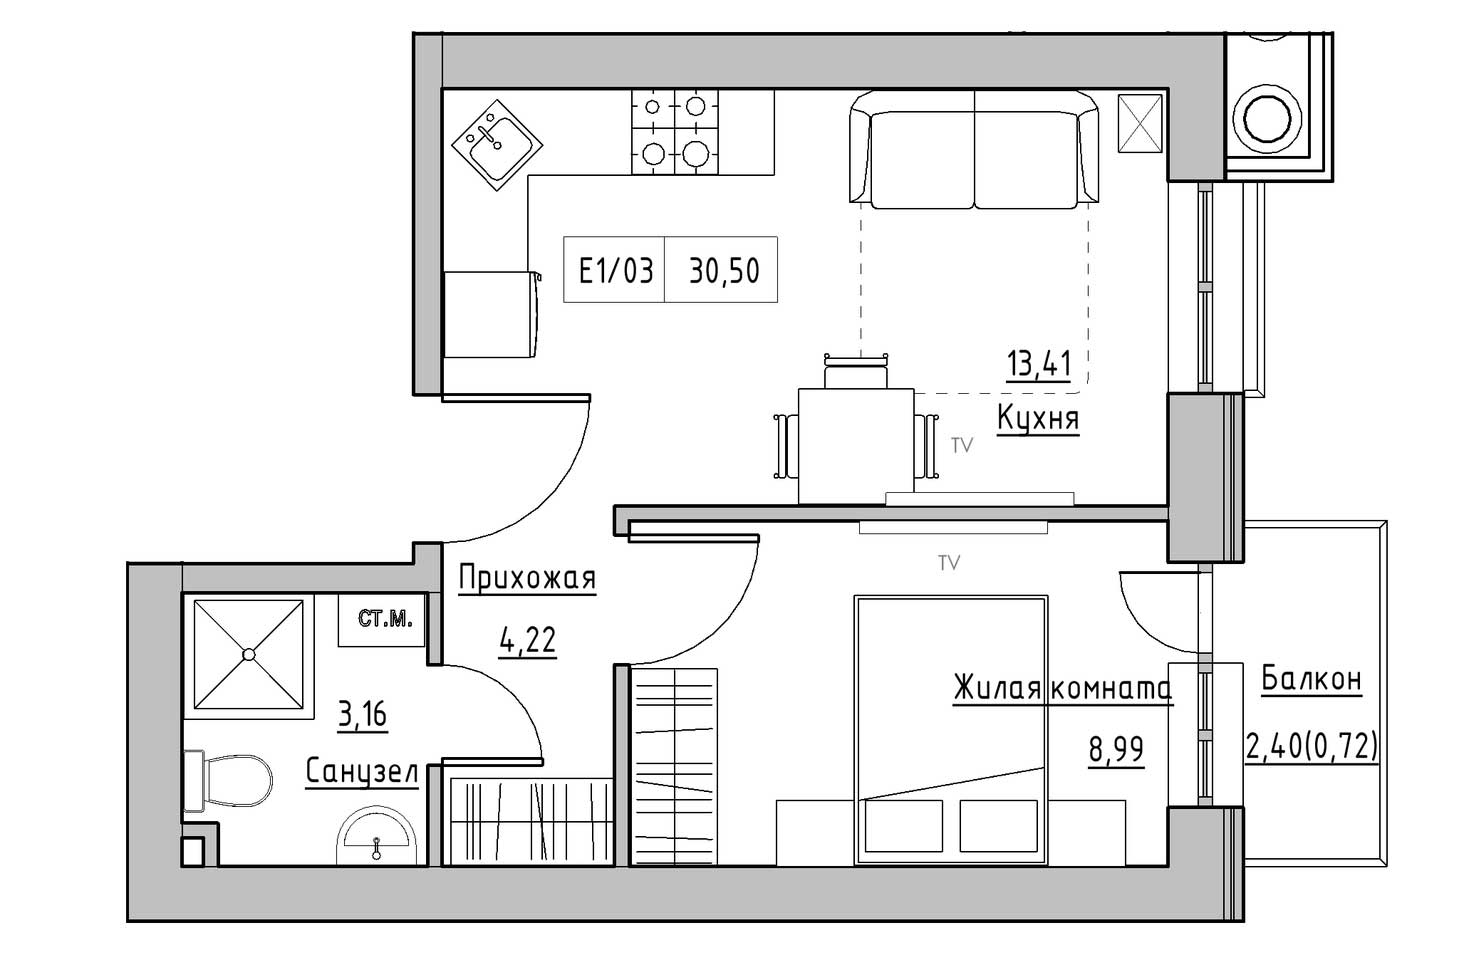 Planning 1-rm flats area 30.5m2, KS-009-05/0002.